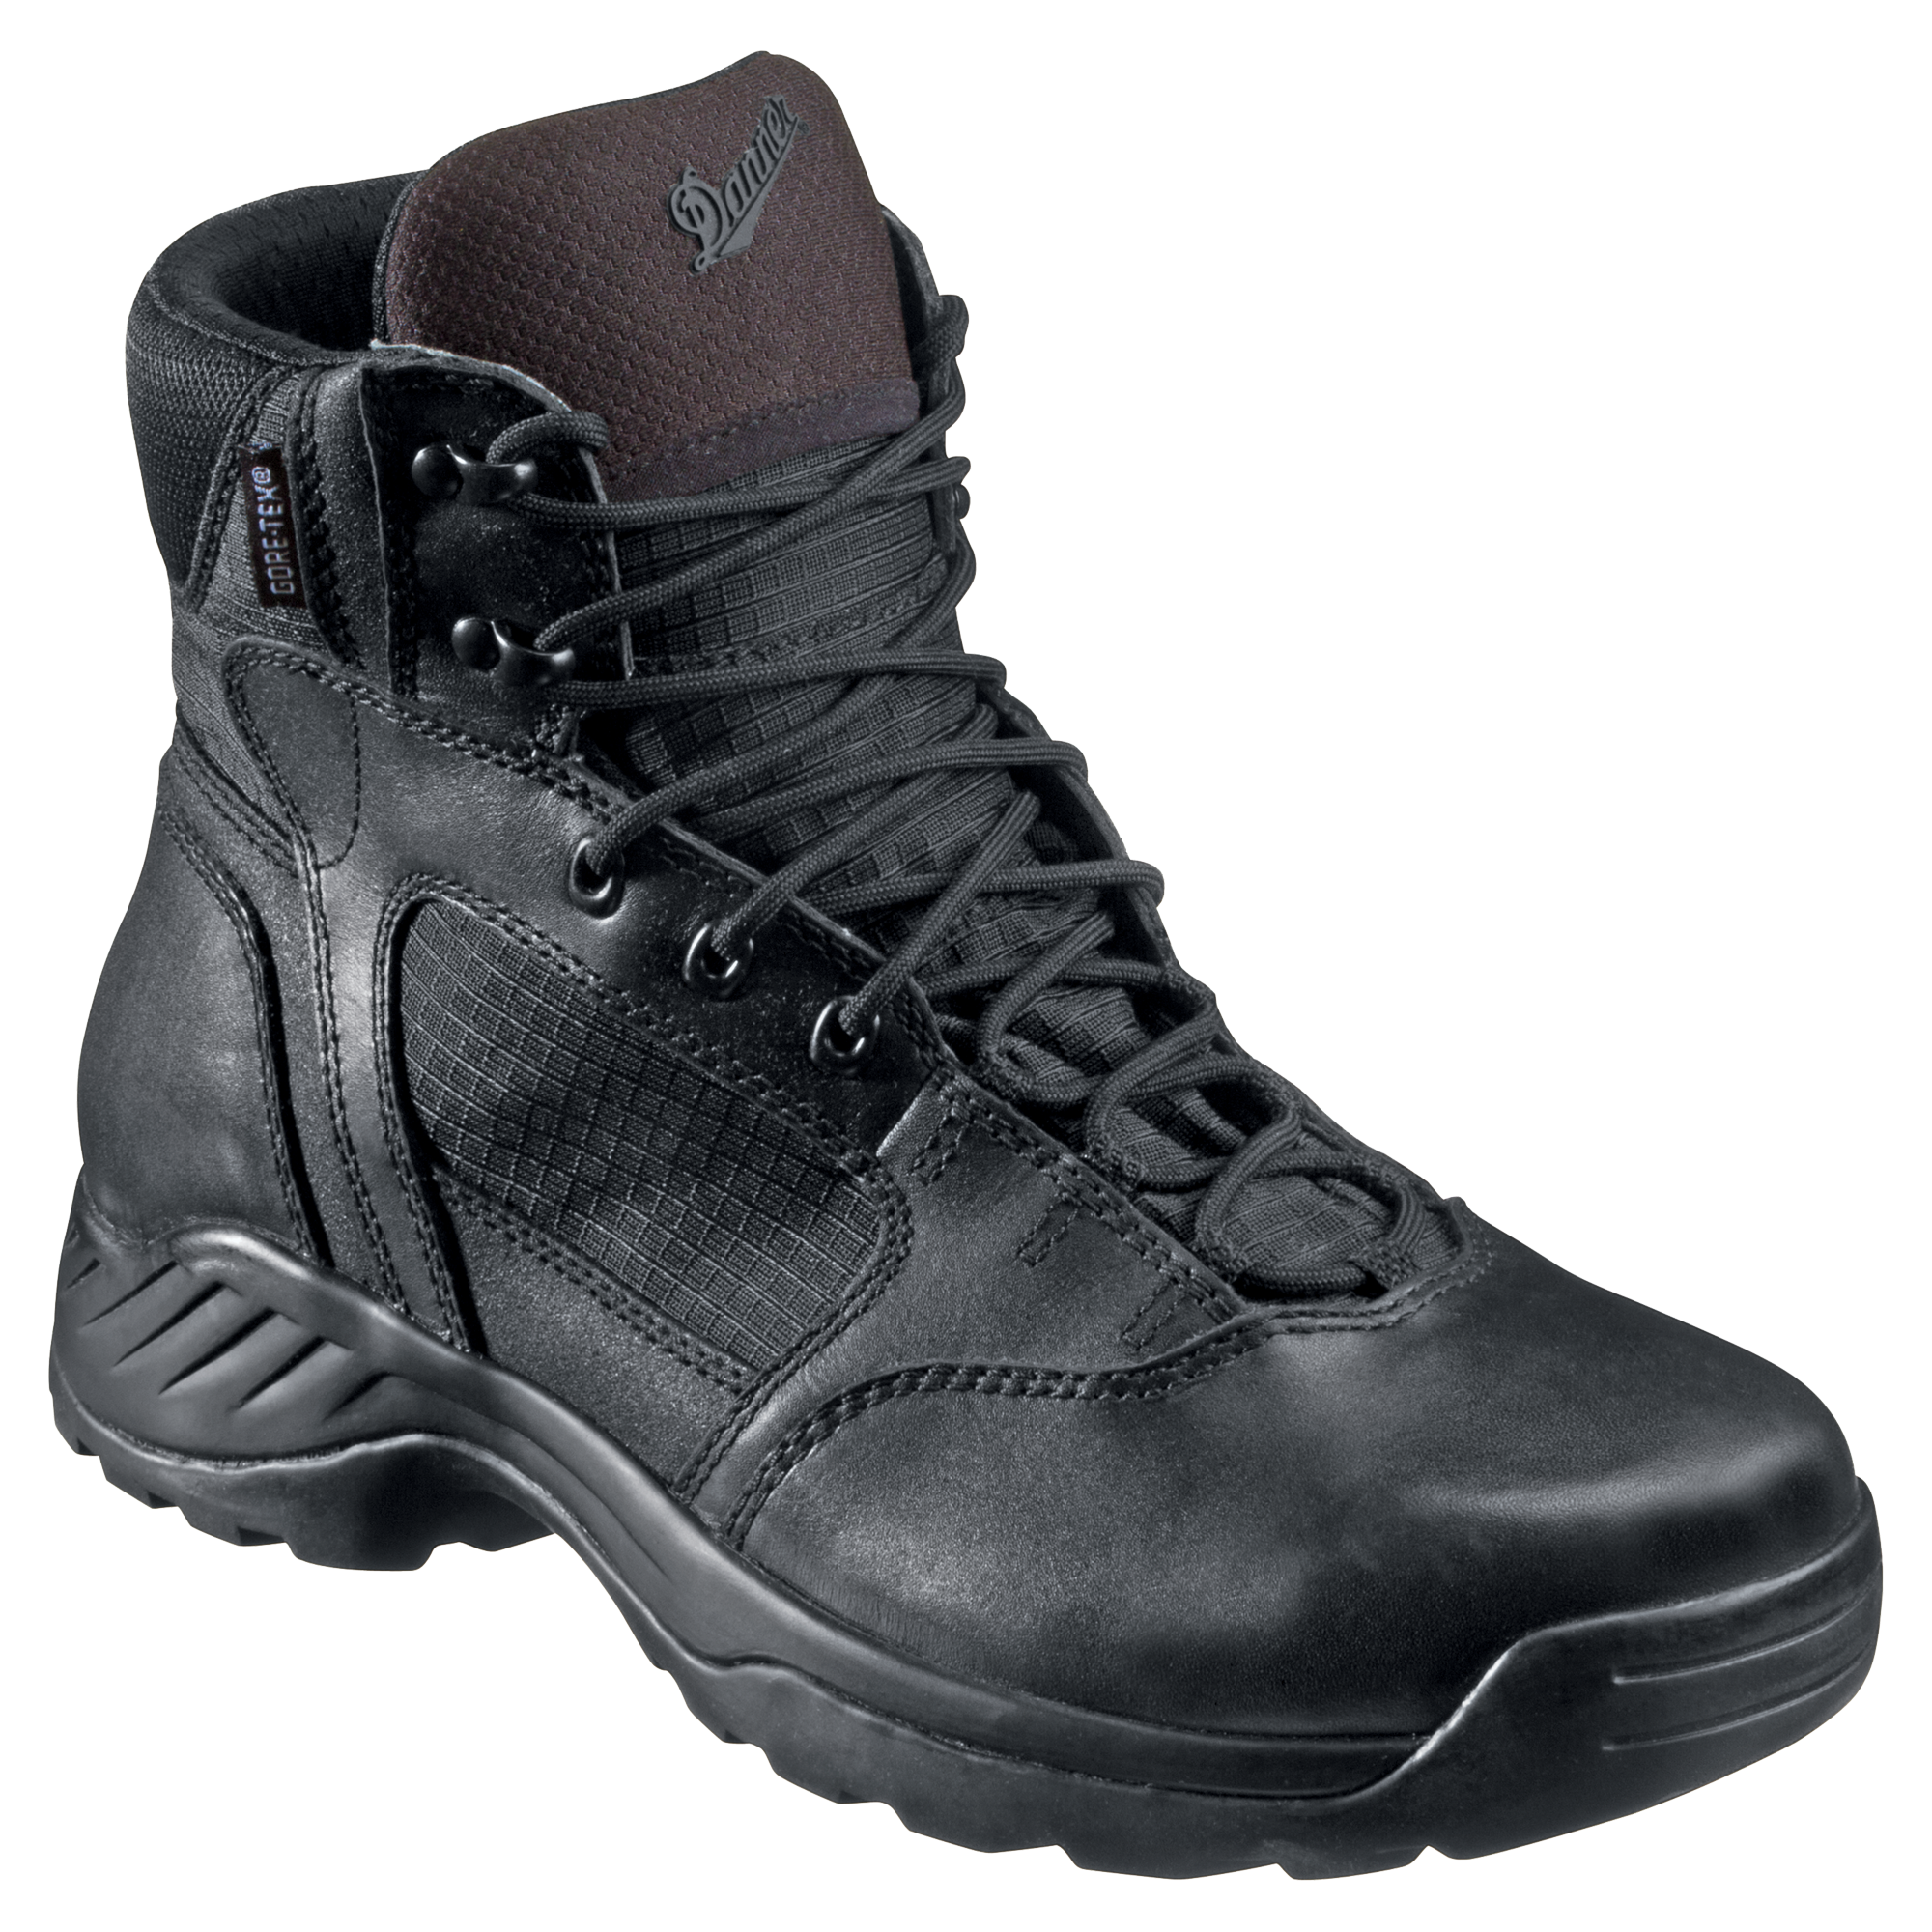 Danner Kinetic Side-Zip GORE-TEX Work Boots for Men - Black - 14M